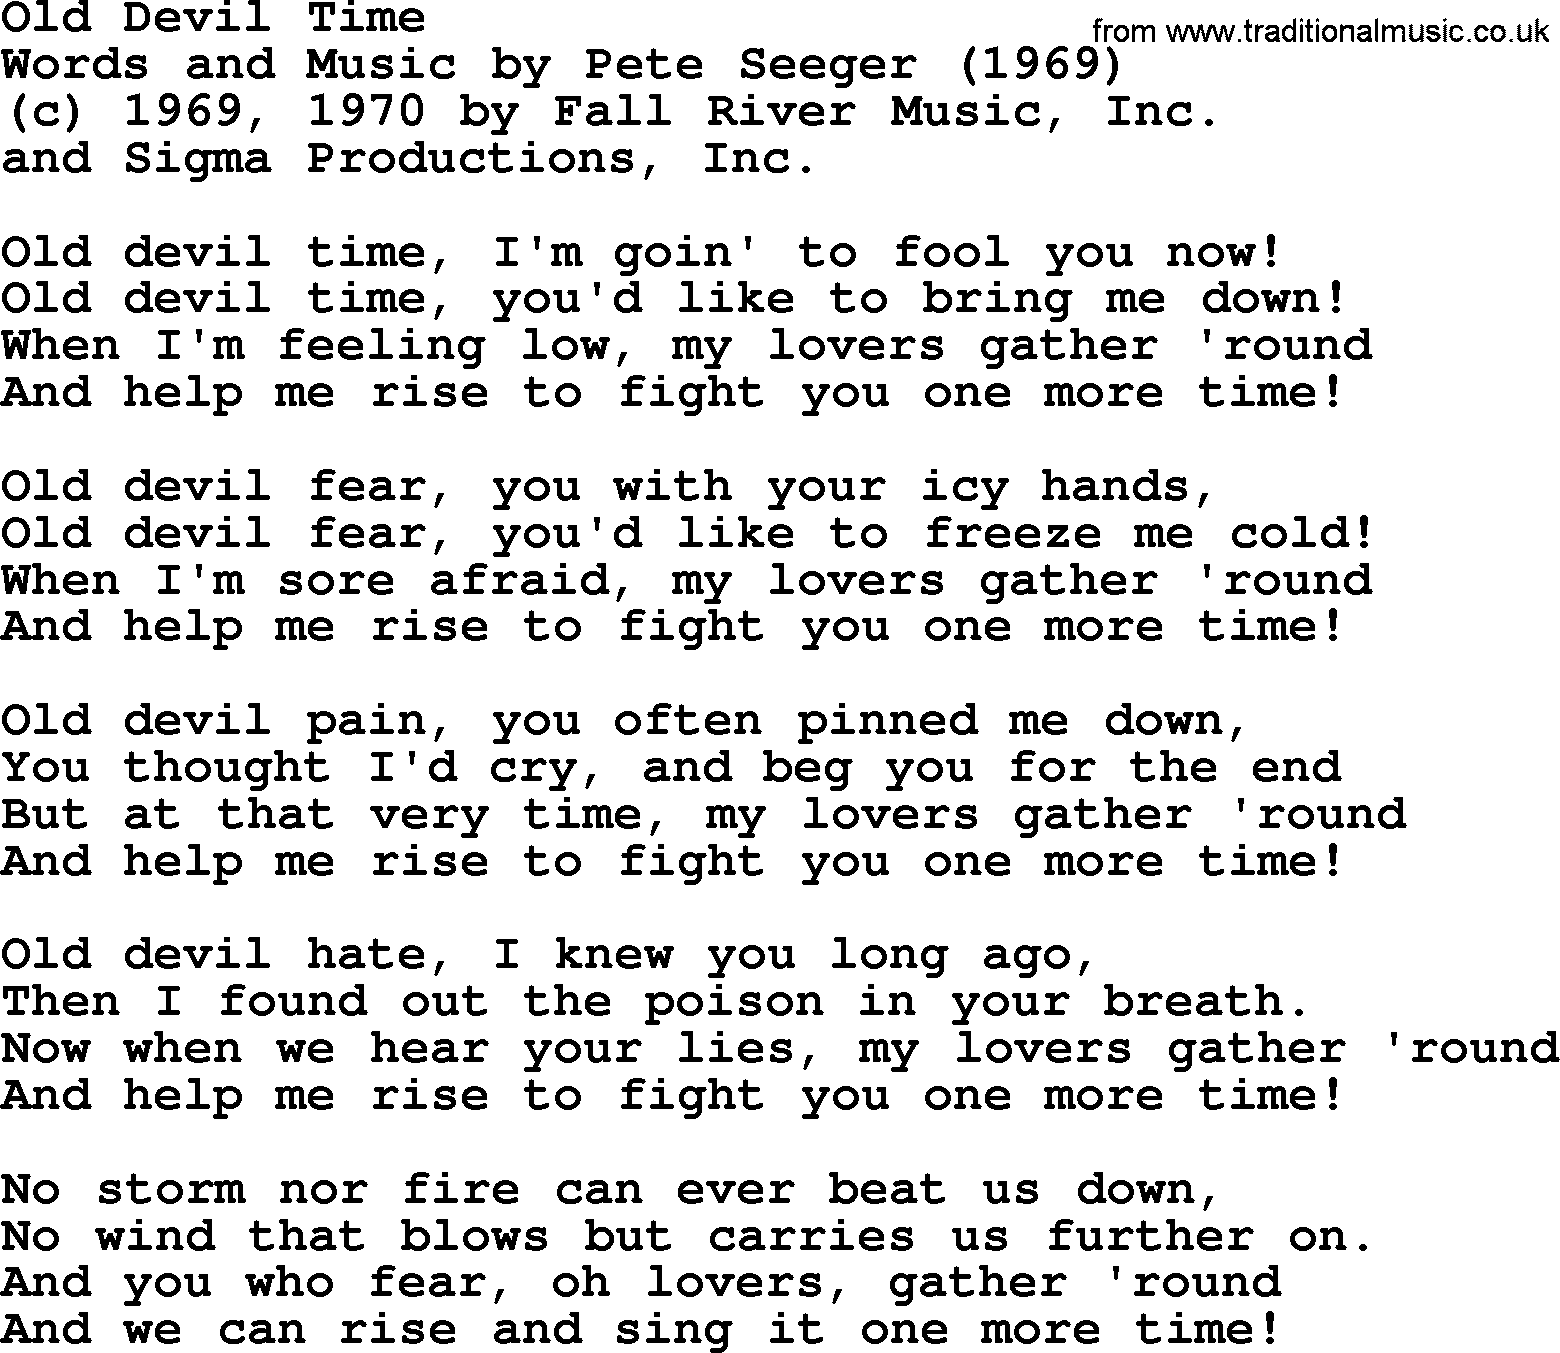 Pete Seeger song Old Devil Time-Pete-Seeger.txt lyrics